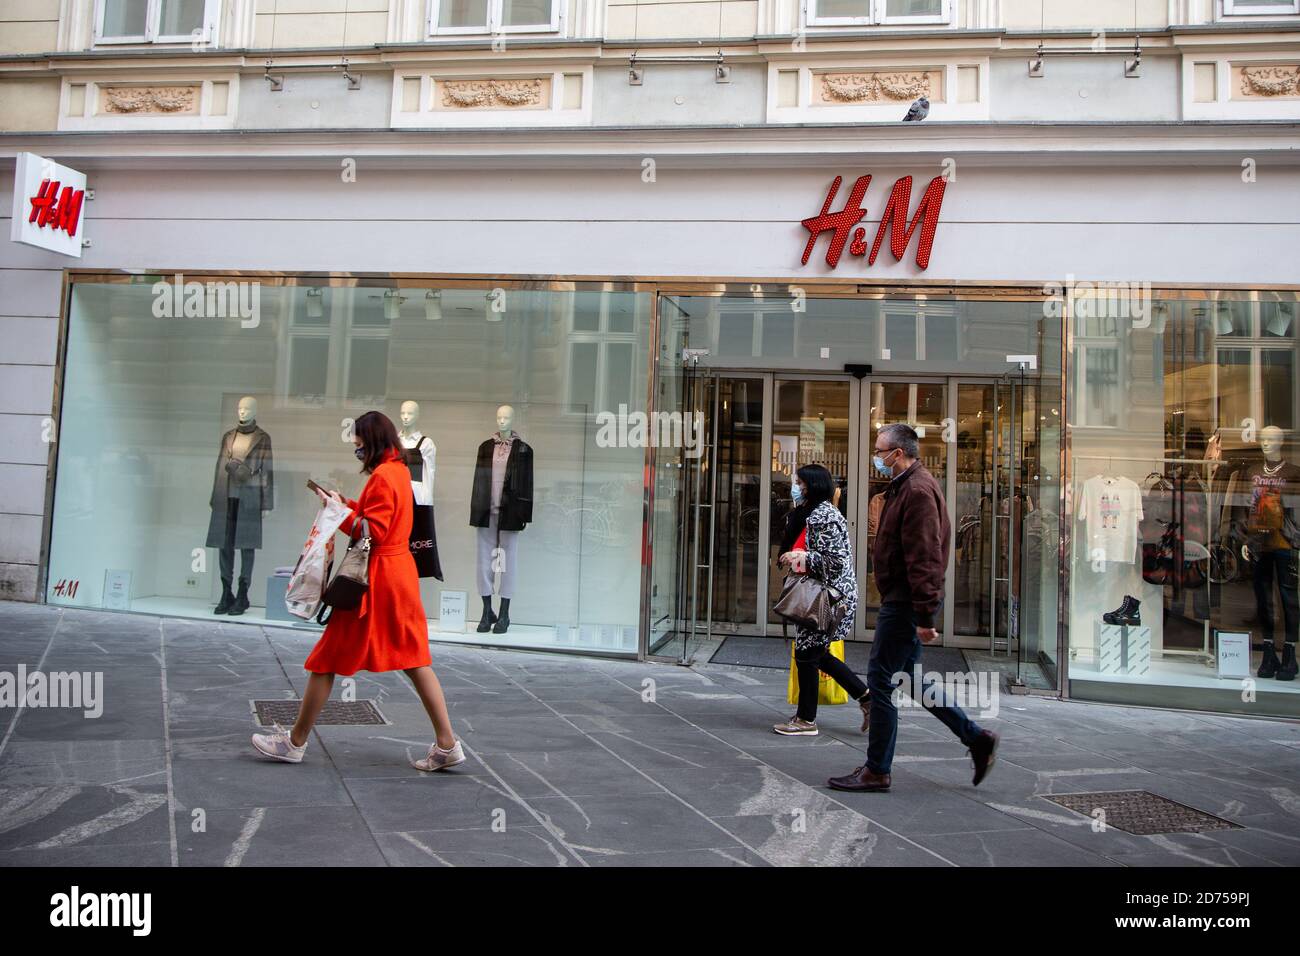 People wearing face masks walk past the Swedish multinational